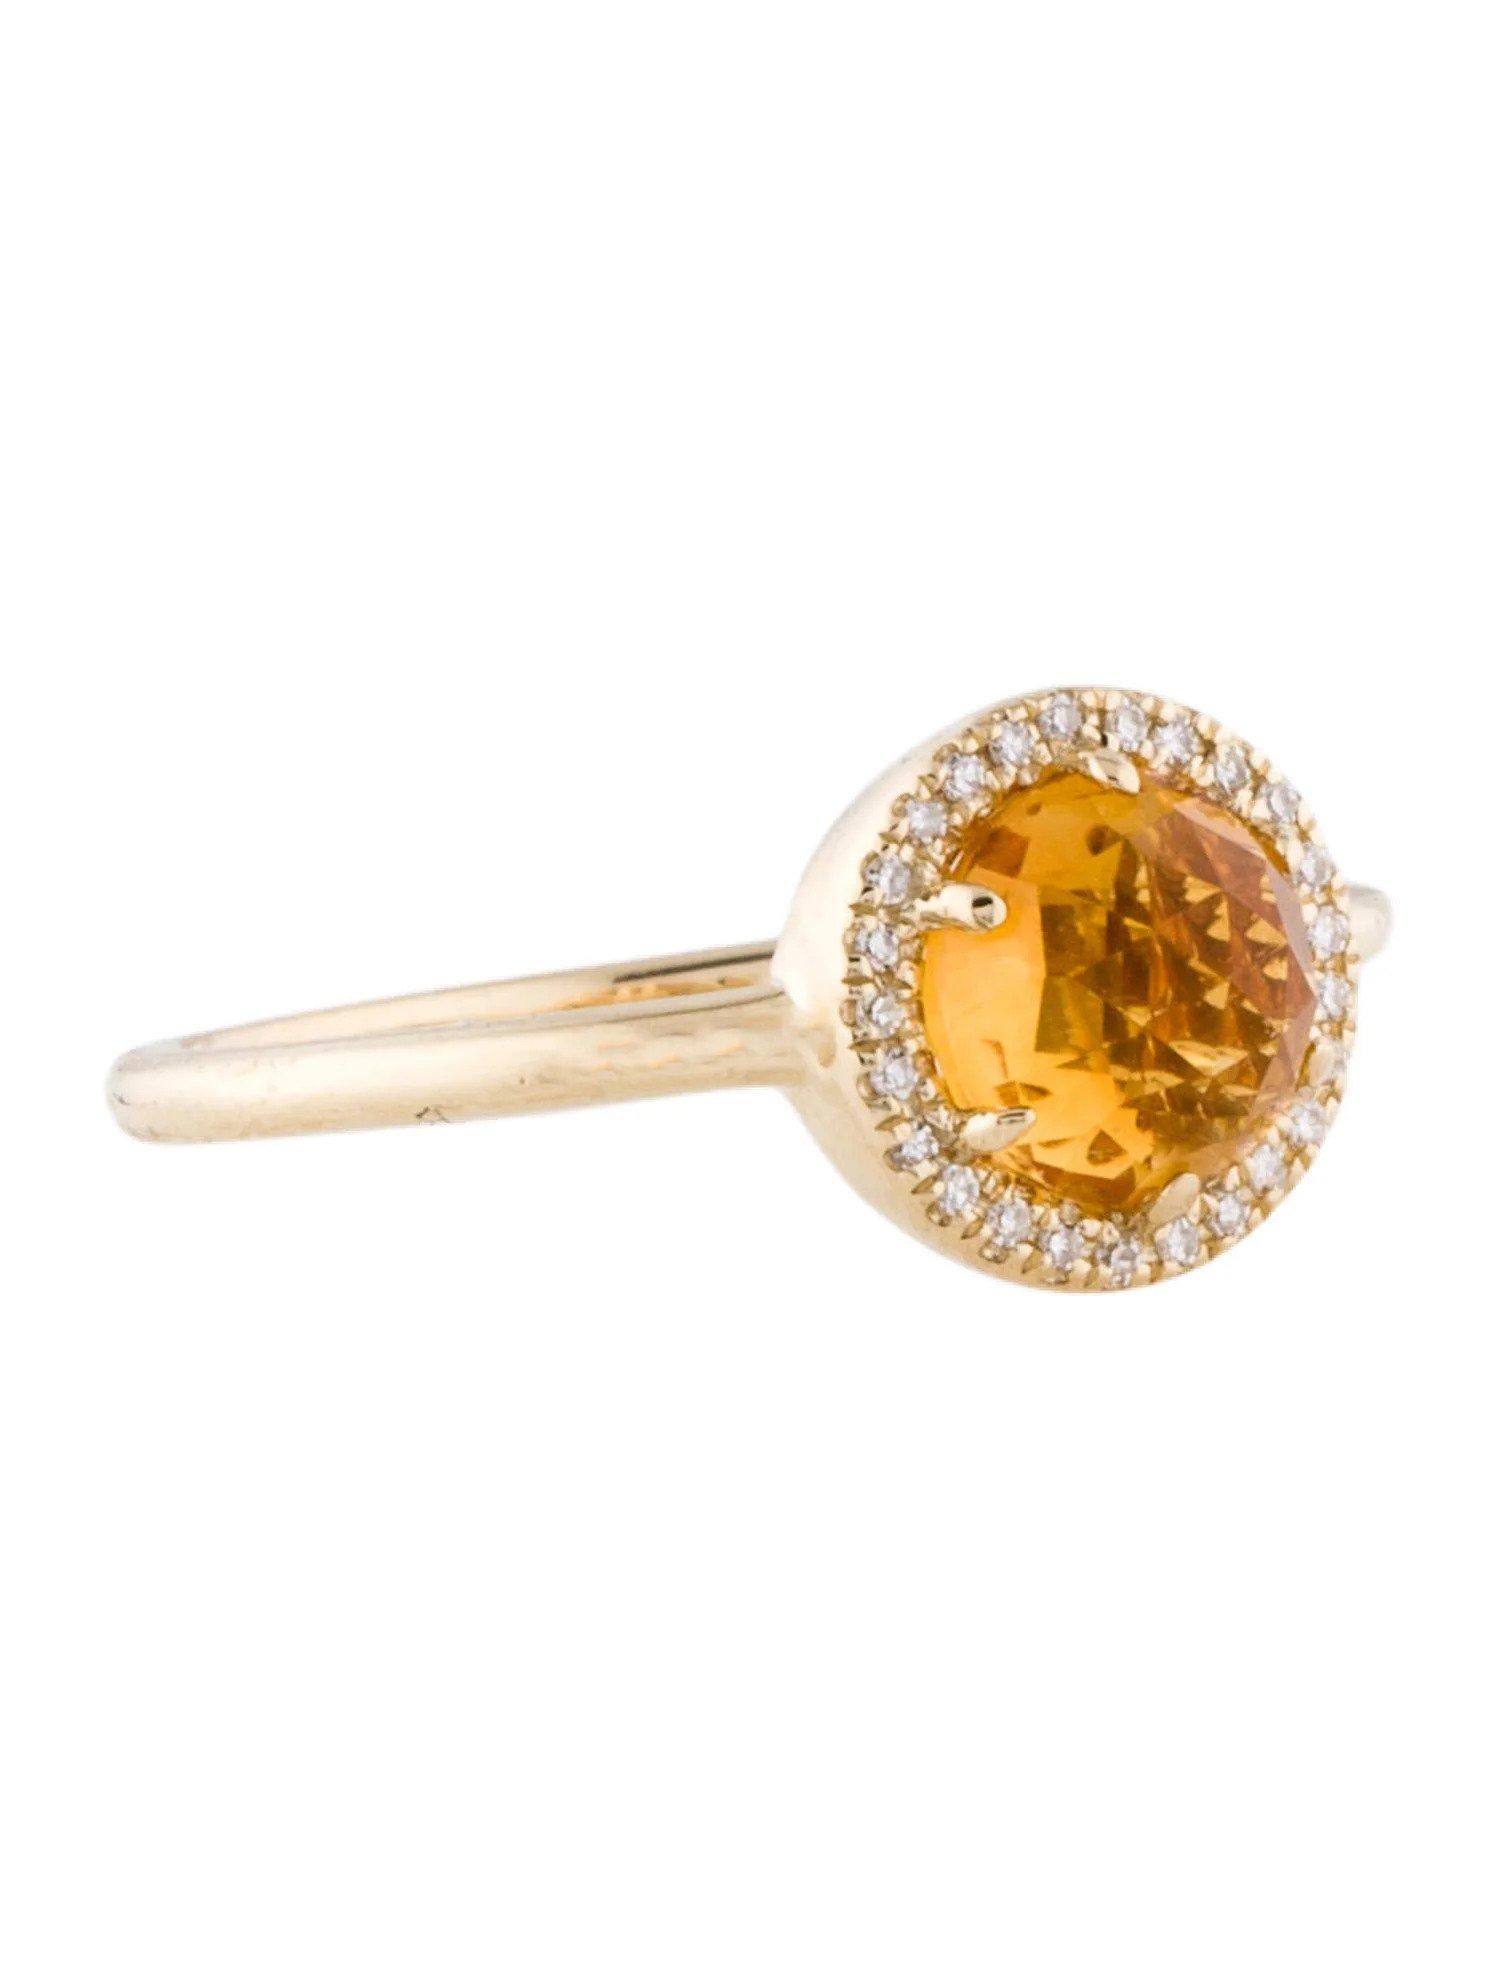 Round Cut 1.08 Carat Round Citrine & Diamond Yellow Gold Ring For Sale